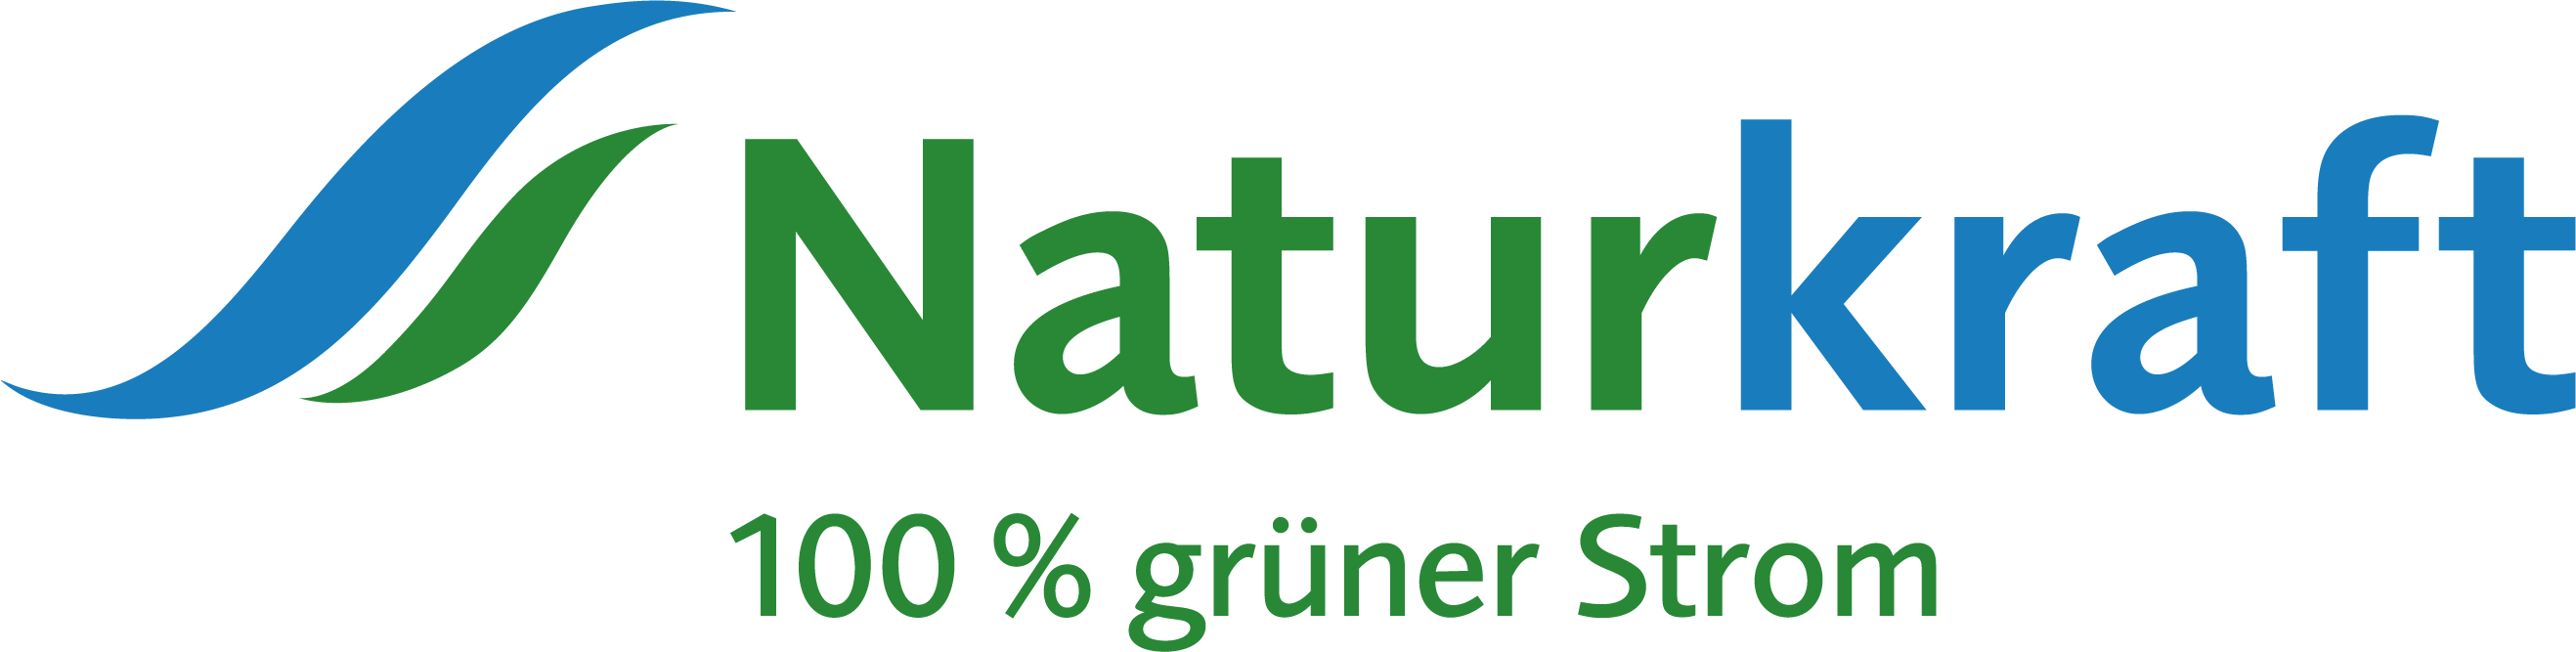 Naturkraft Logo wide claim 2017